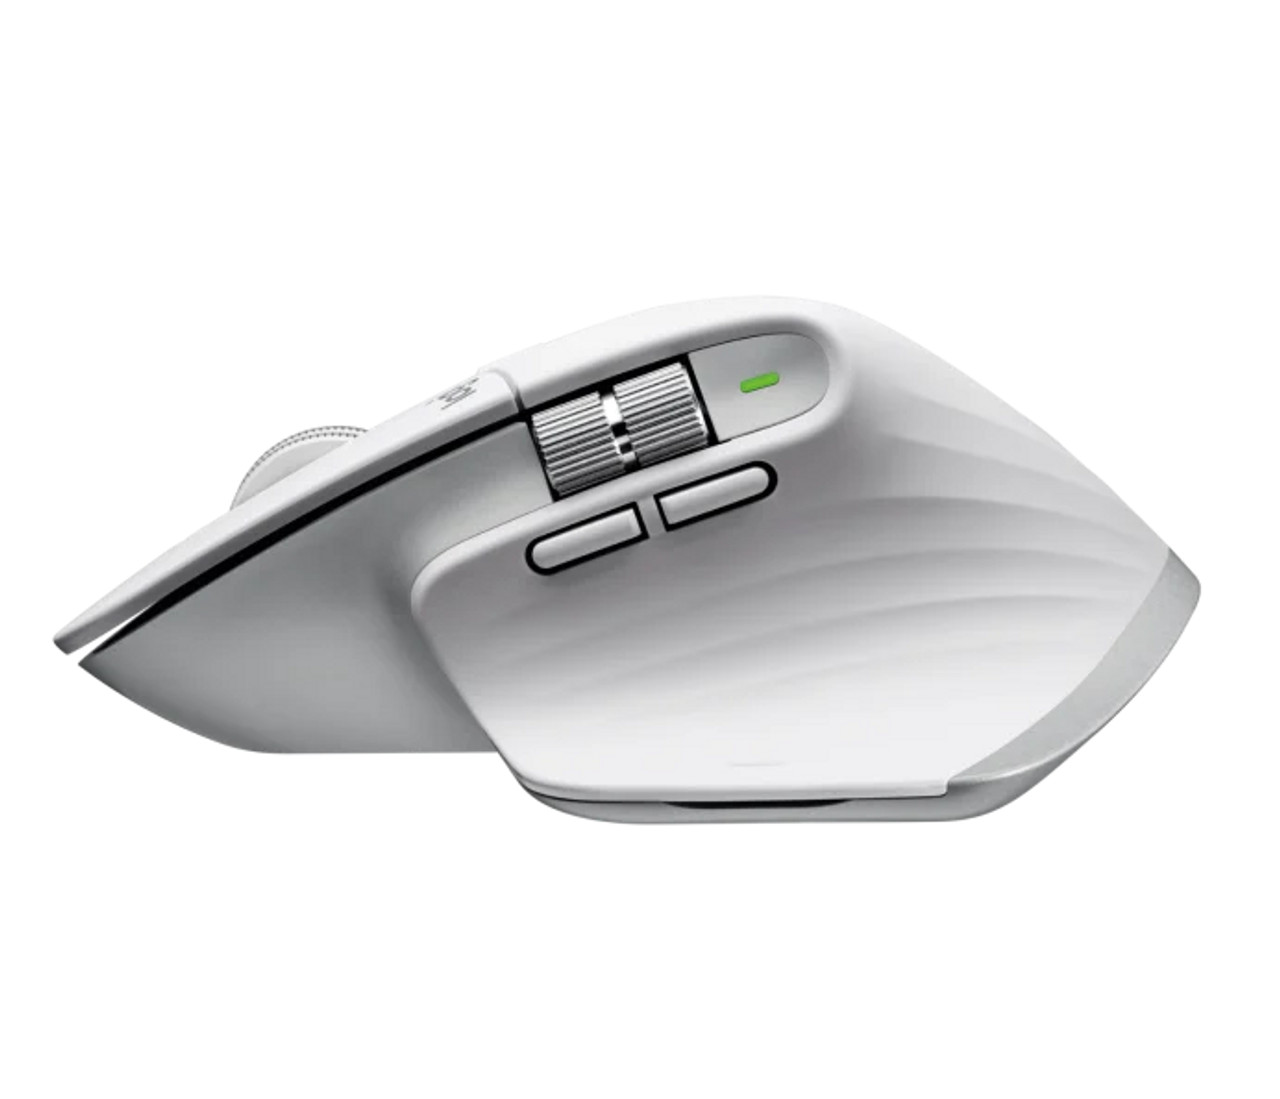 Logitech MX Master 3S Performance Mouse - Graphite (910-006559